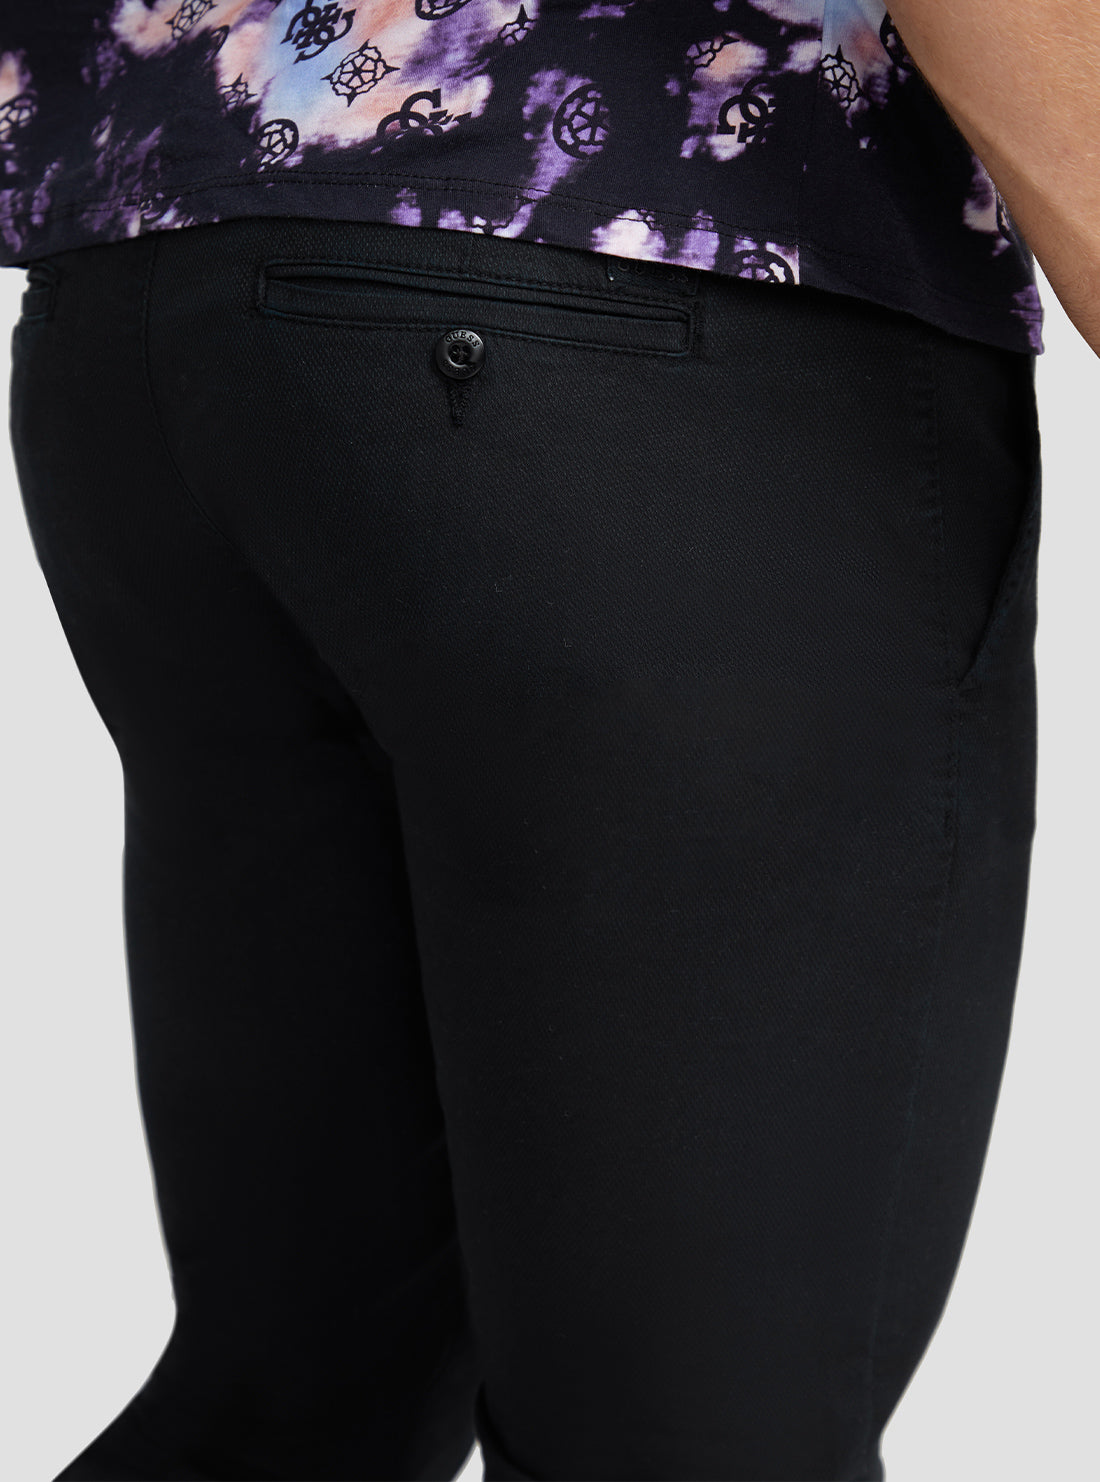 GUESS Men's Black Daniel Slim Chino Pants M3RB29WF5Q3 Detail View